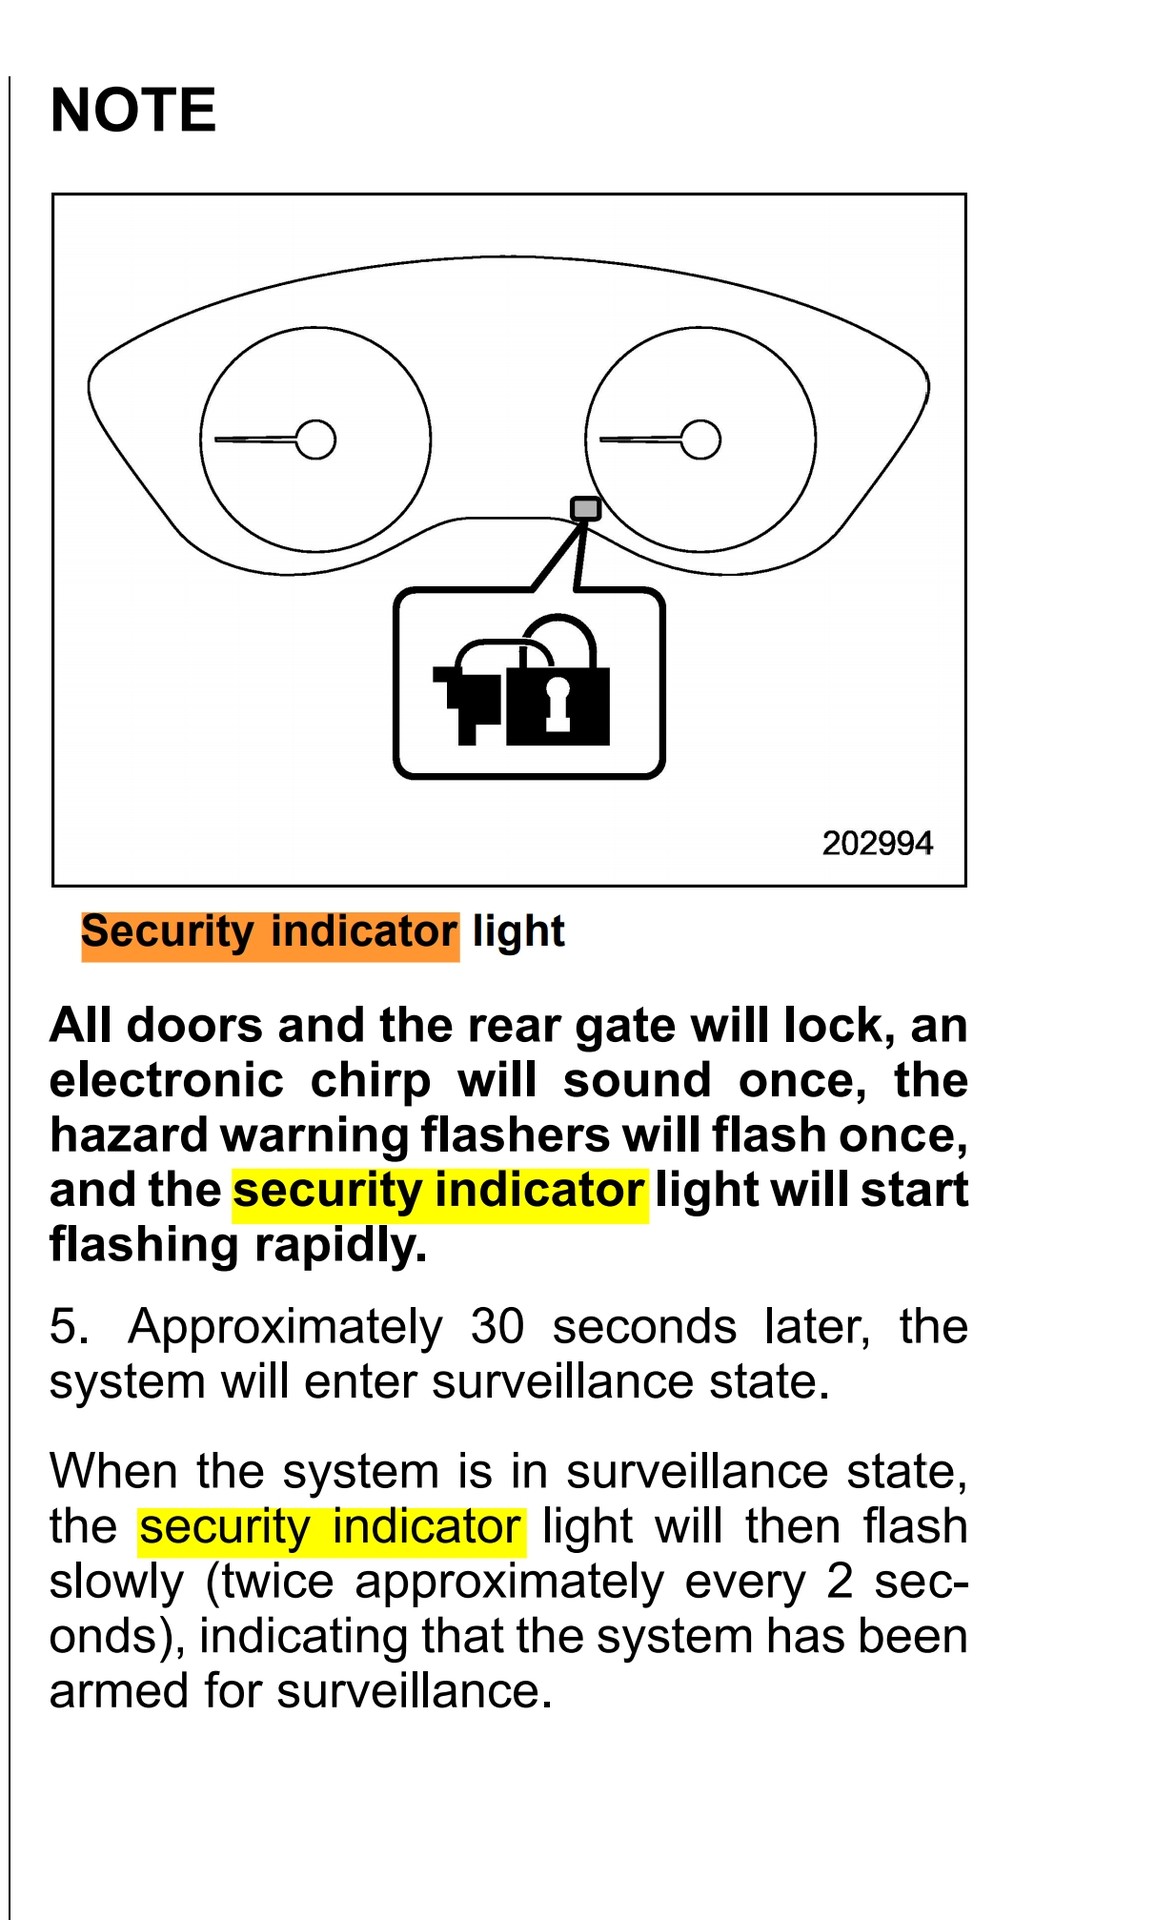 Security Indicator Light Flashing